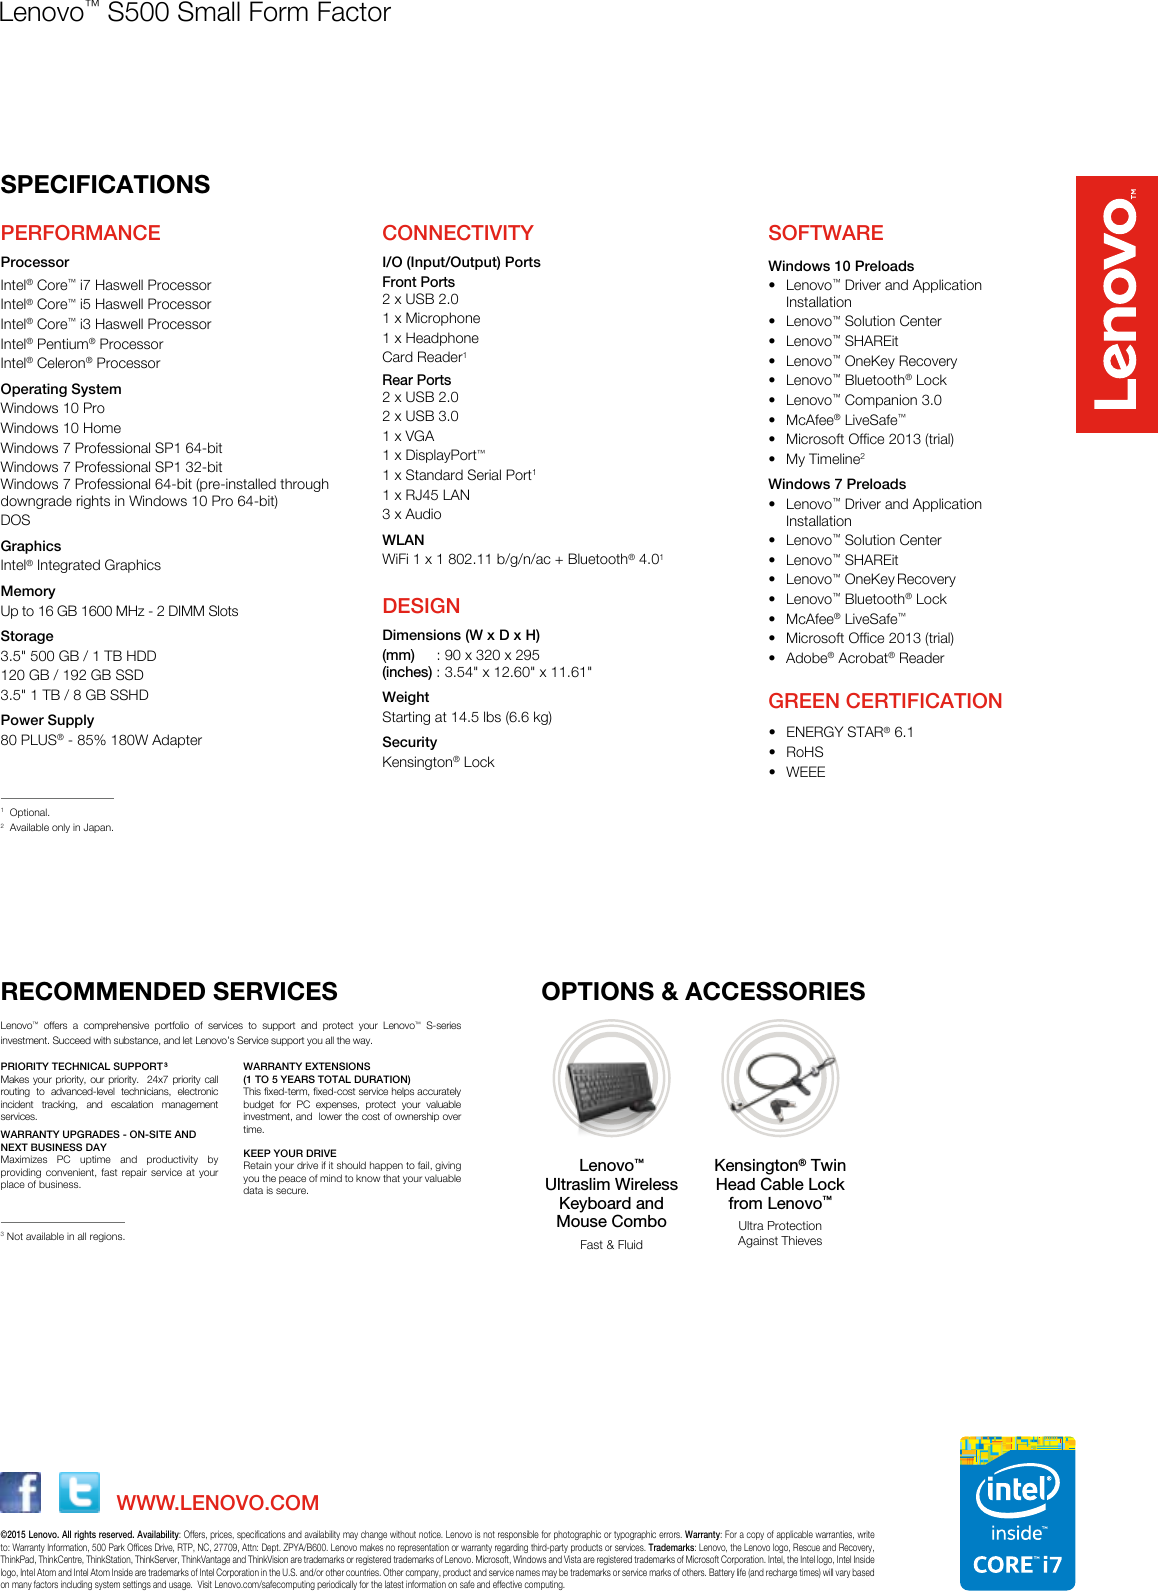 Page 2 of 2 - Lenovo S500 Spec Sheet 201509 User Manual Desktop (Lenovo) - Type 10HS